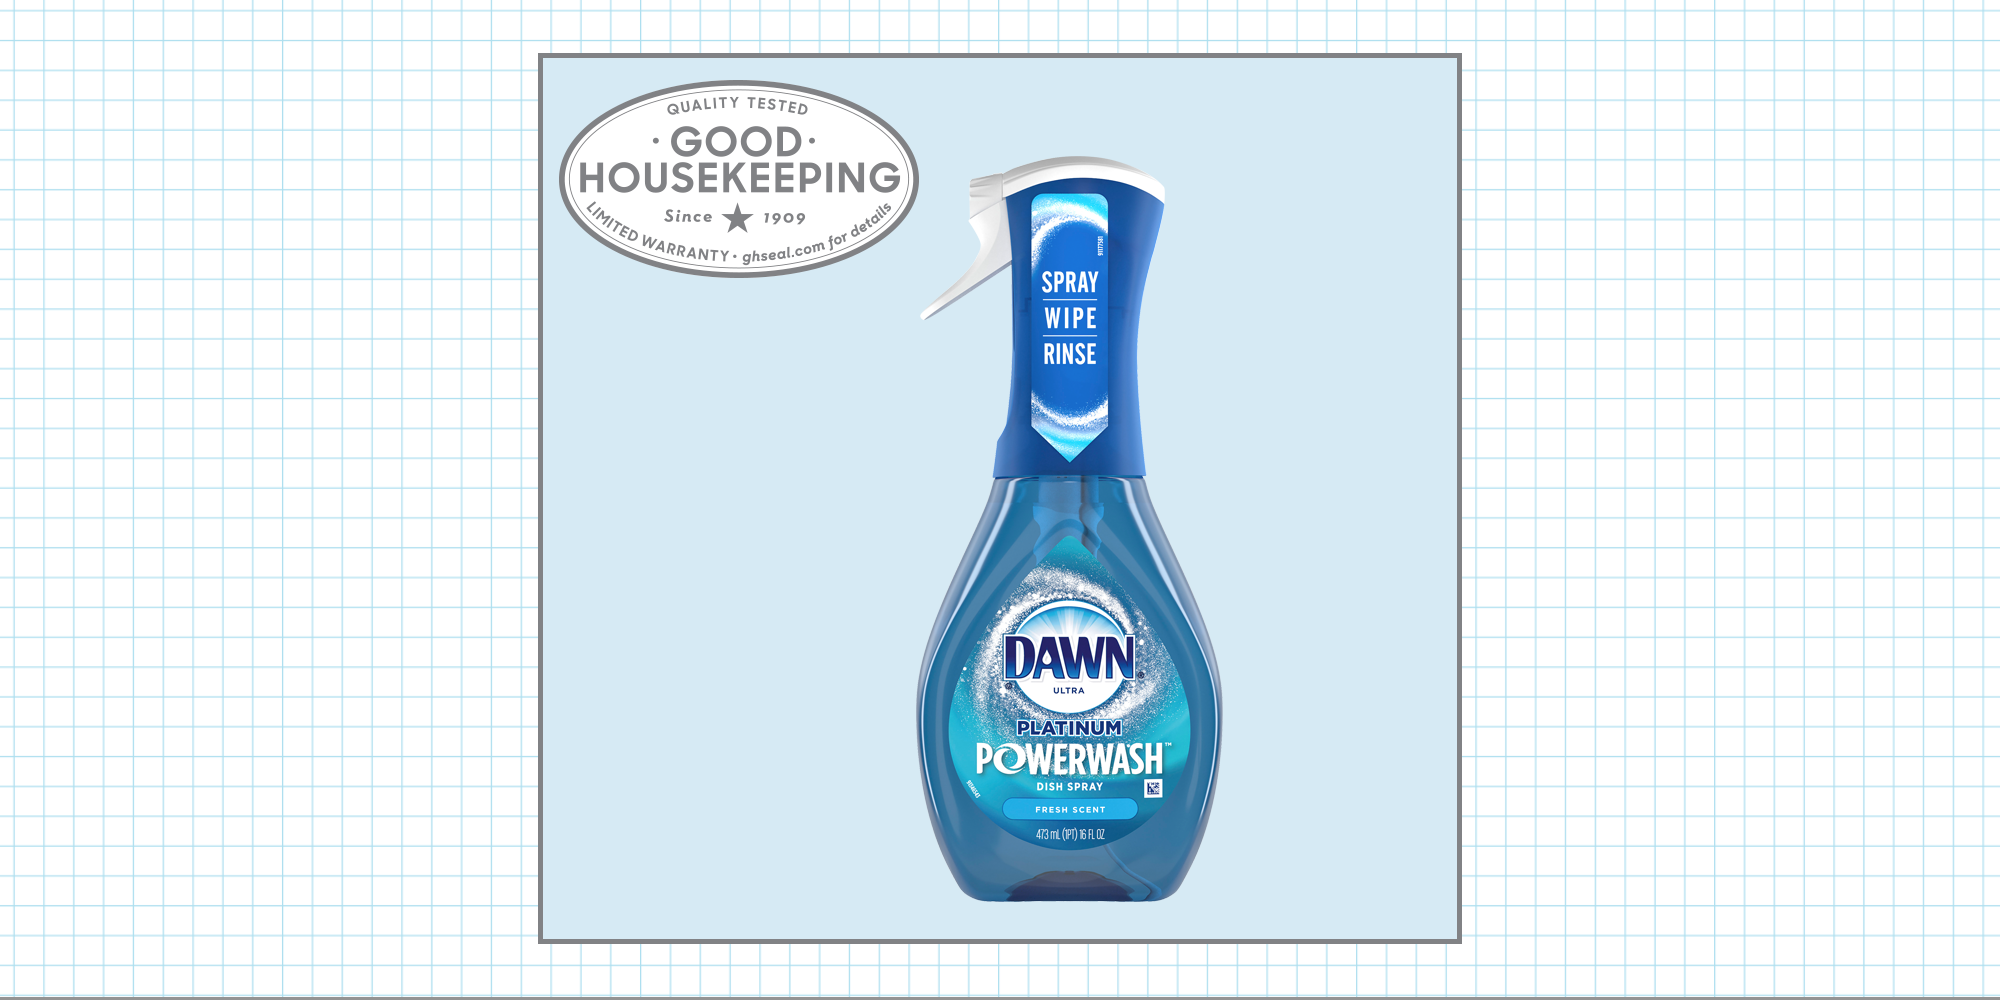 7 New Uses for Dawn Powerwash Dish Spray